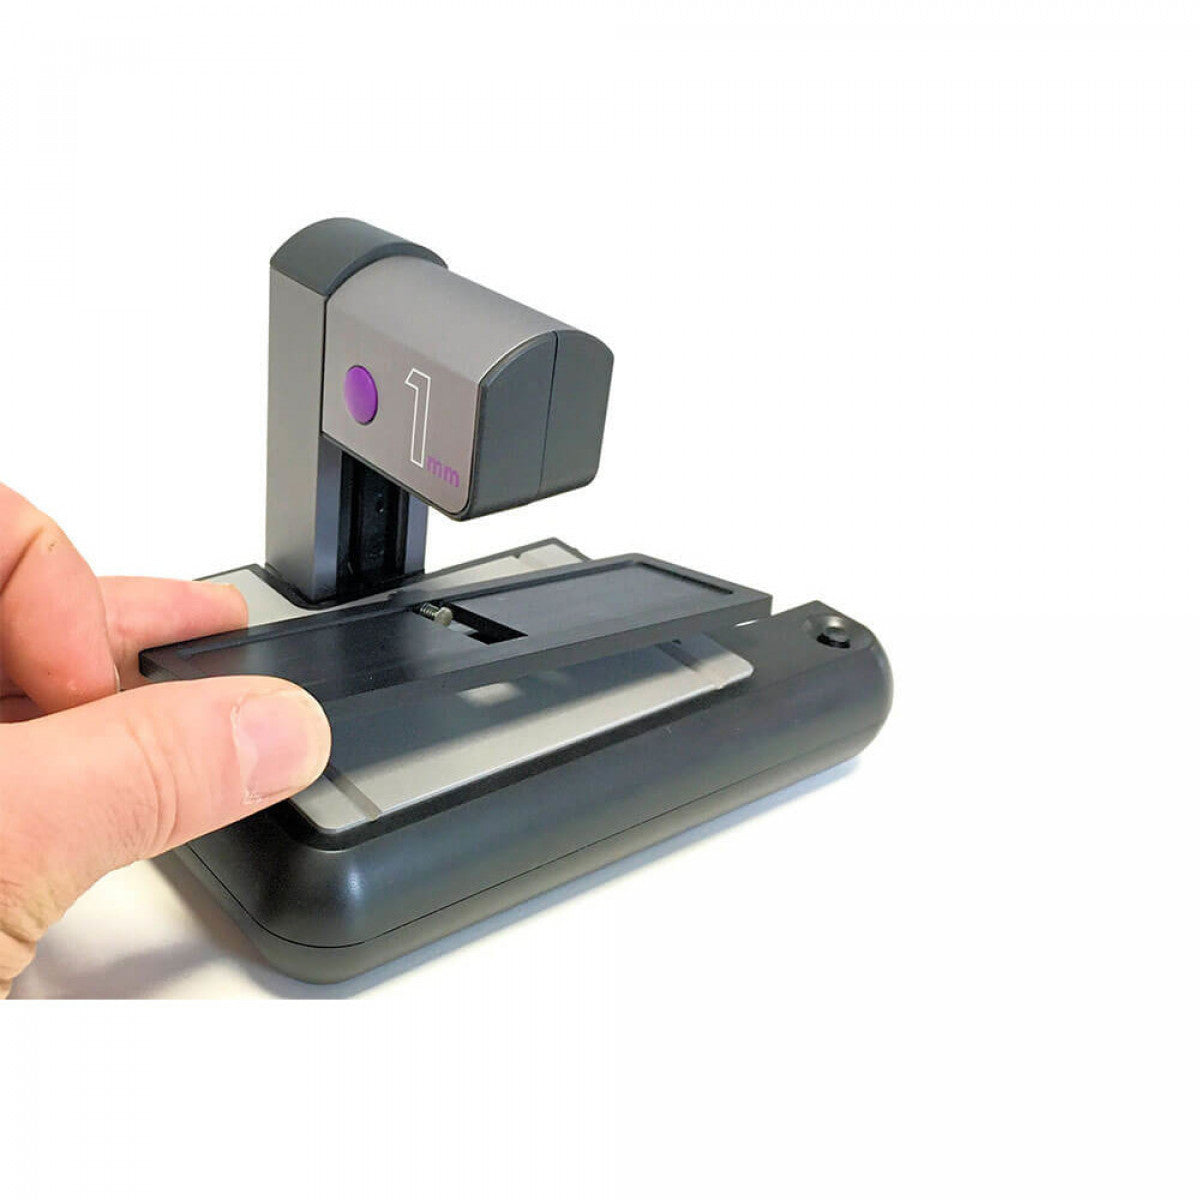 ioLight 1mm Portable Digital Microscope, XY Stage - microscopemarketplace